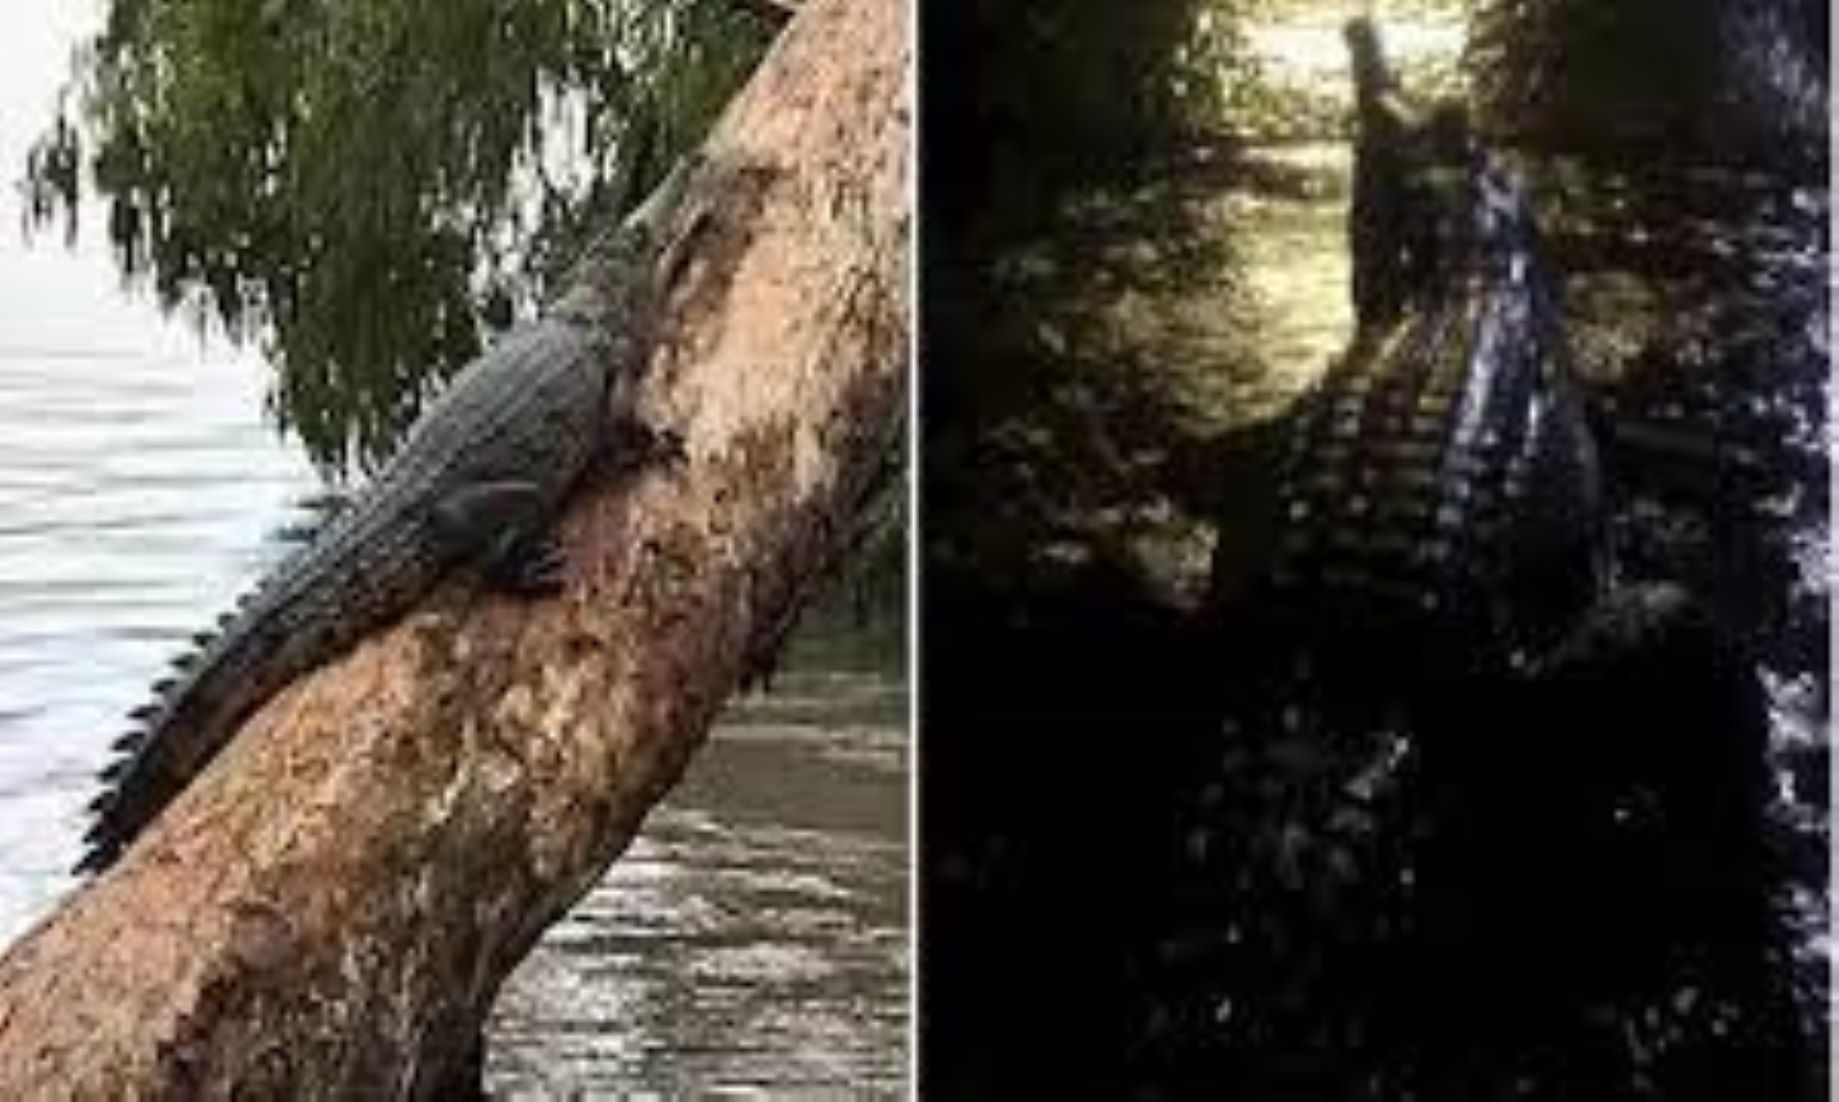 Flood Water Inundated Australia’s Northern Queensland With Crocodiles Lurking Underneath